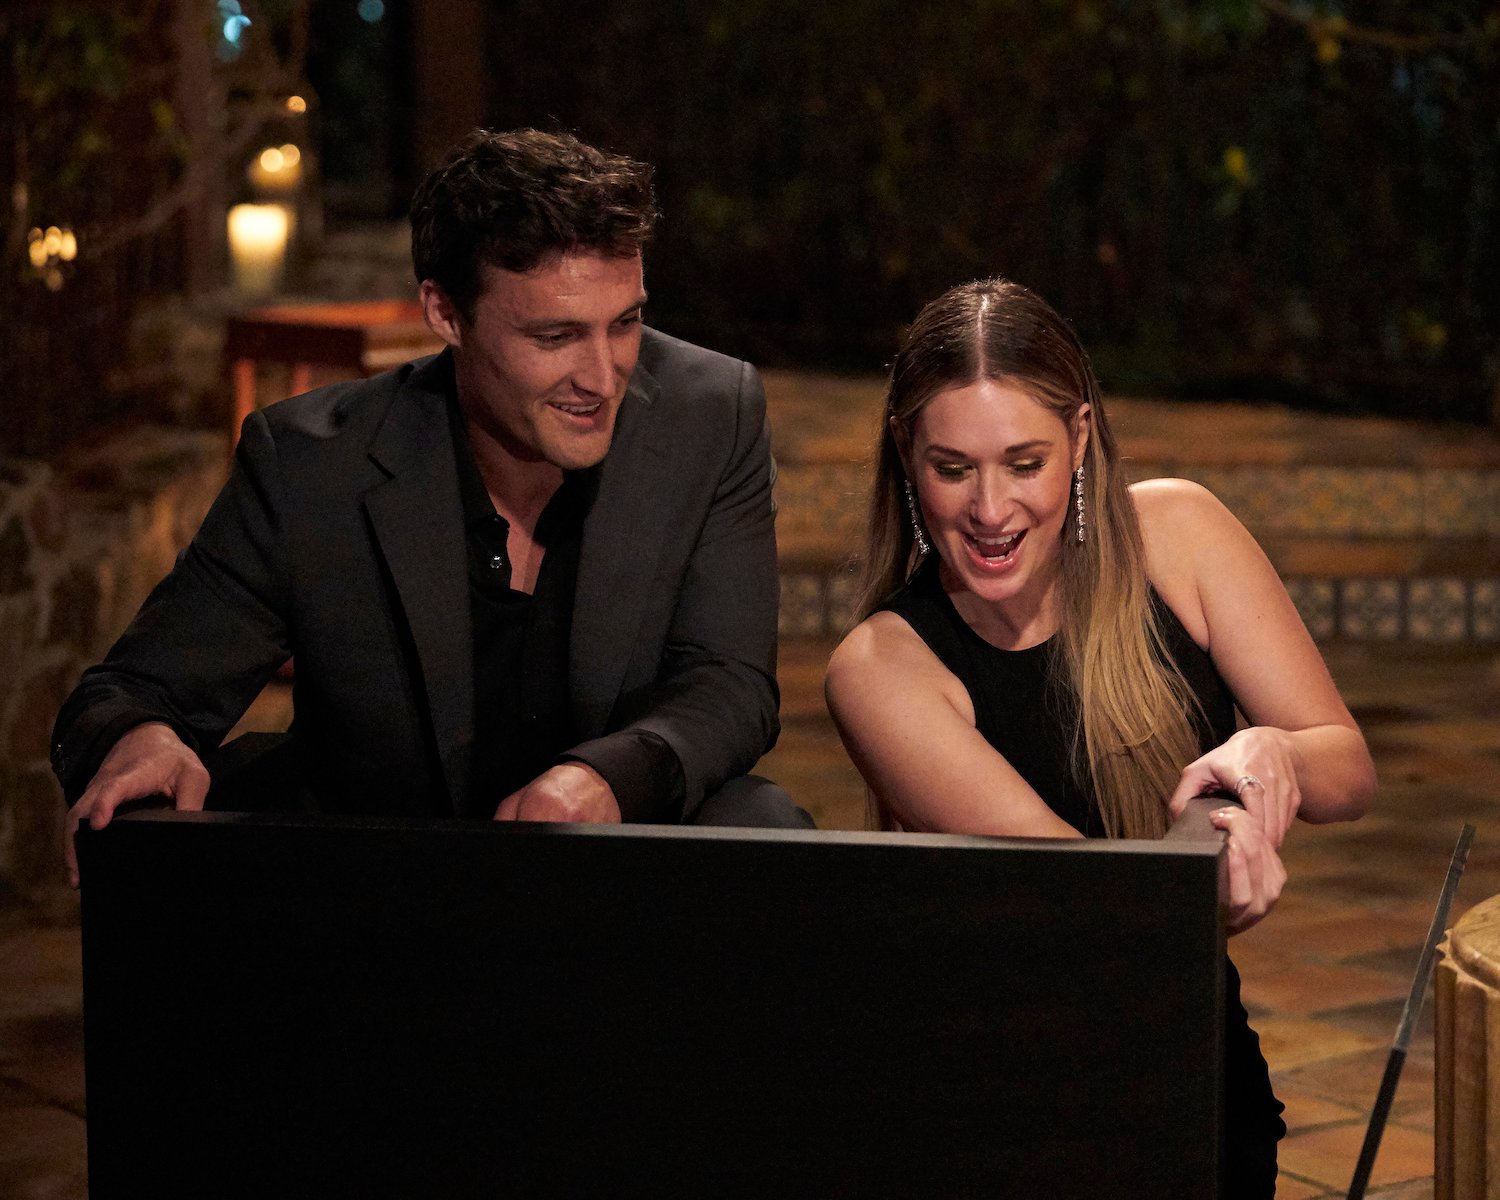 Tino Franco and Rachel Recchia laugh together in season 19 of The Bachelorette.